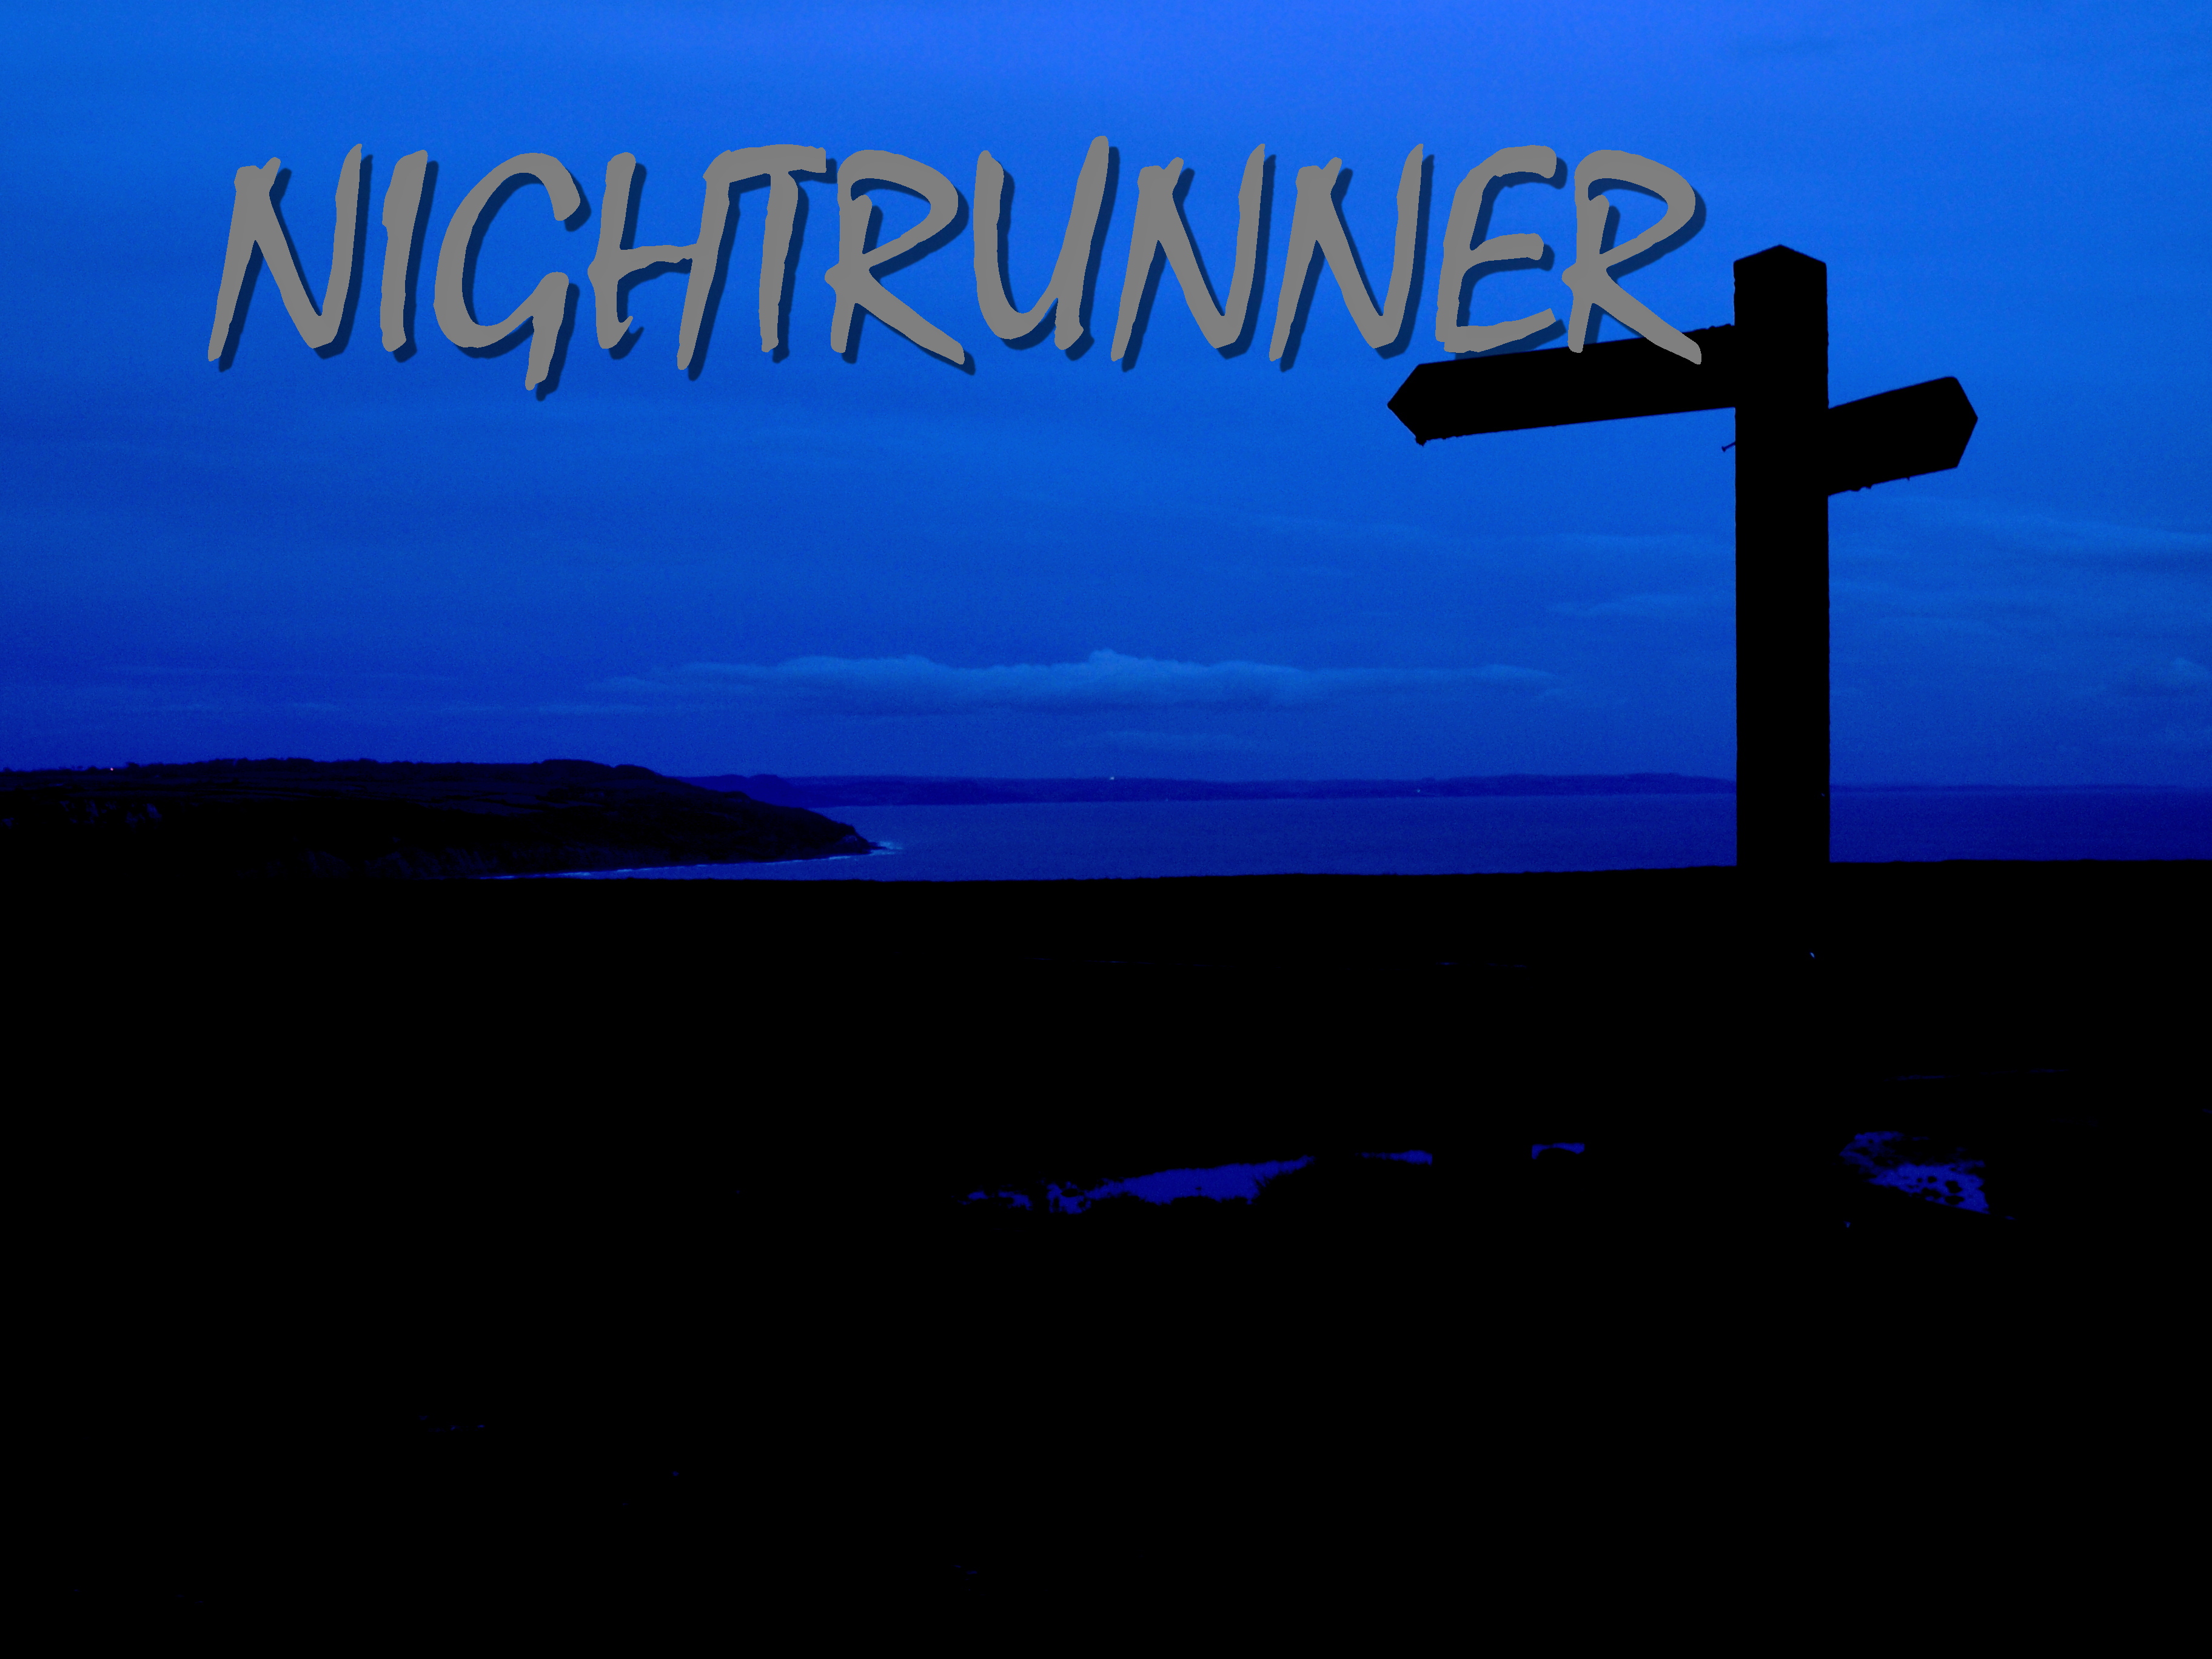 Nightrunner